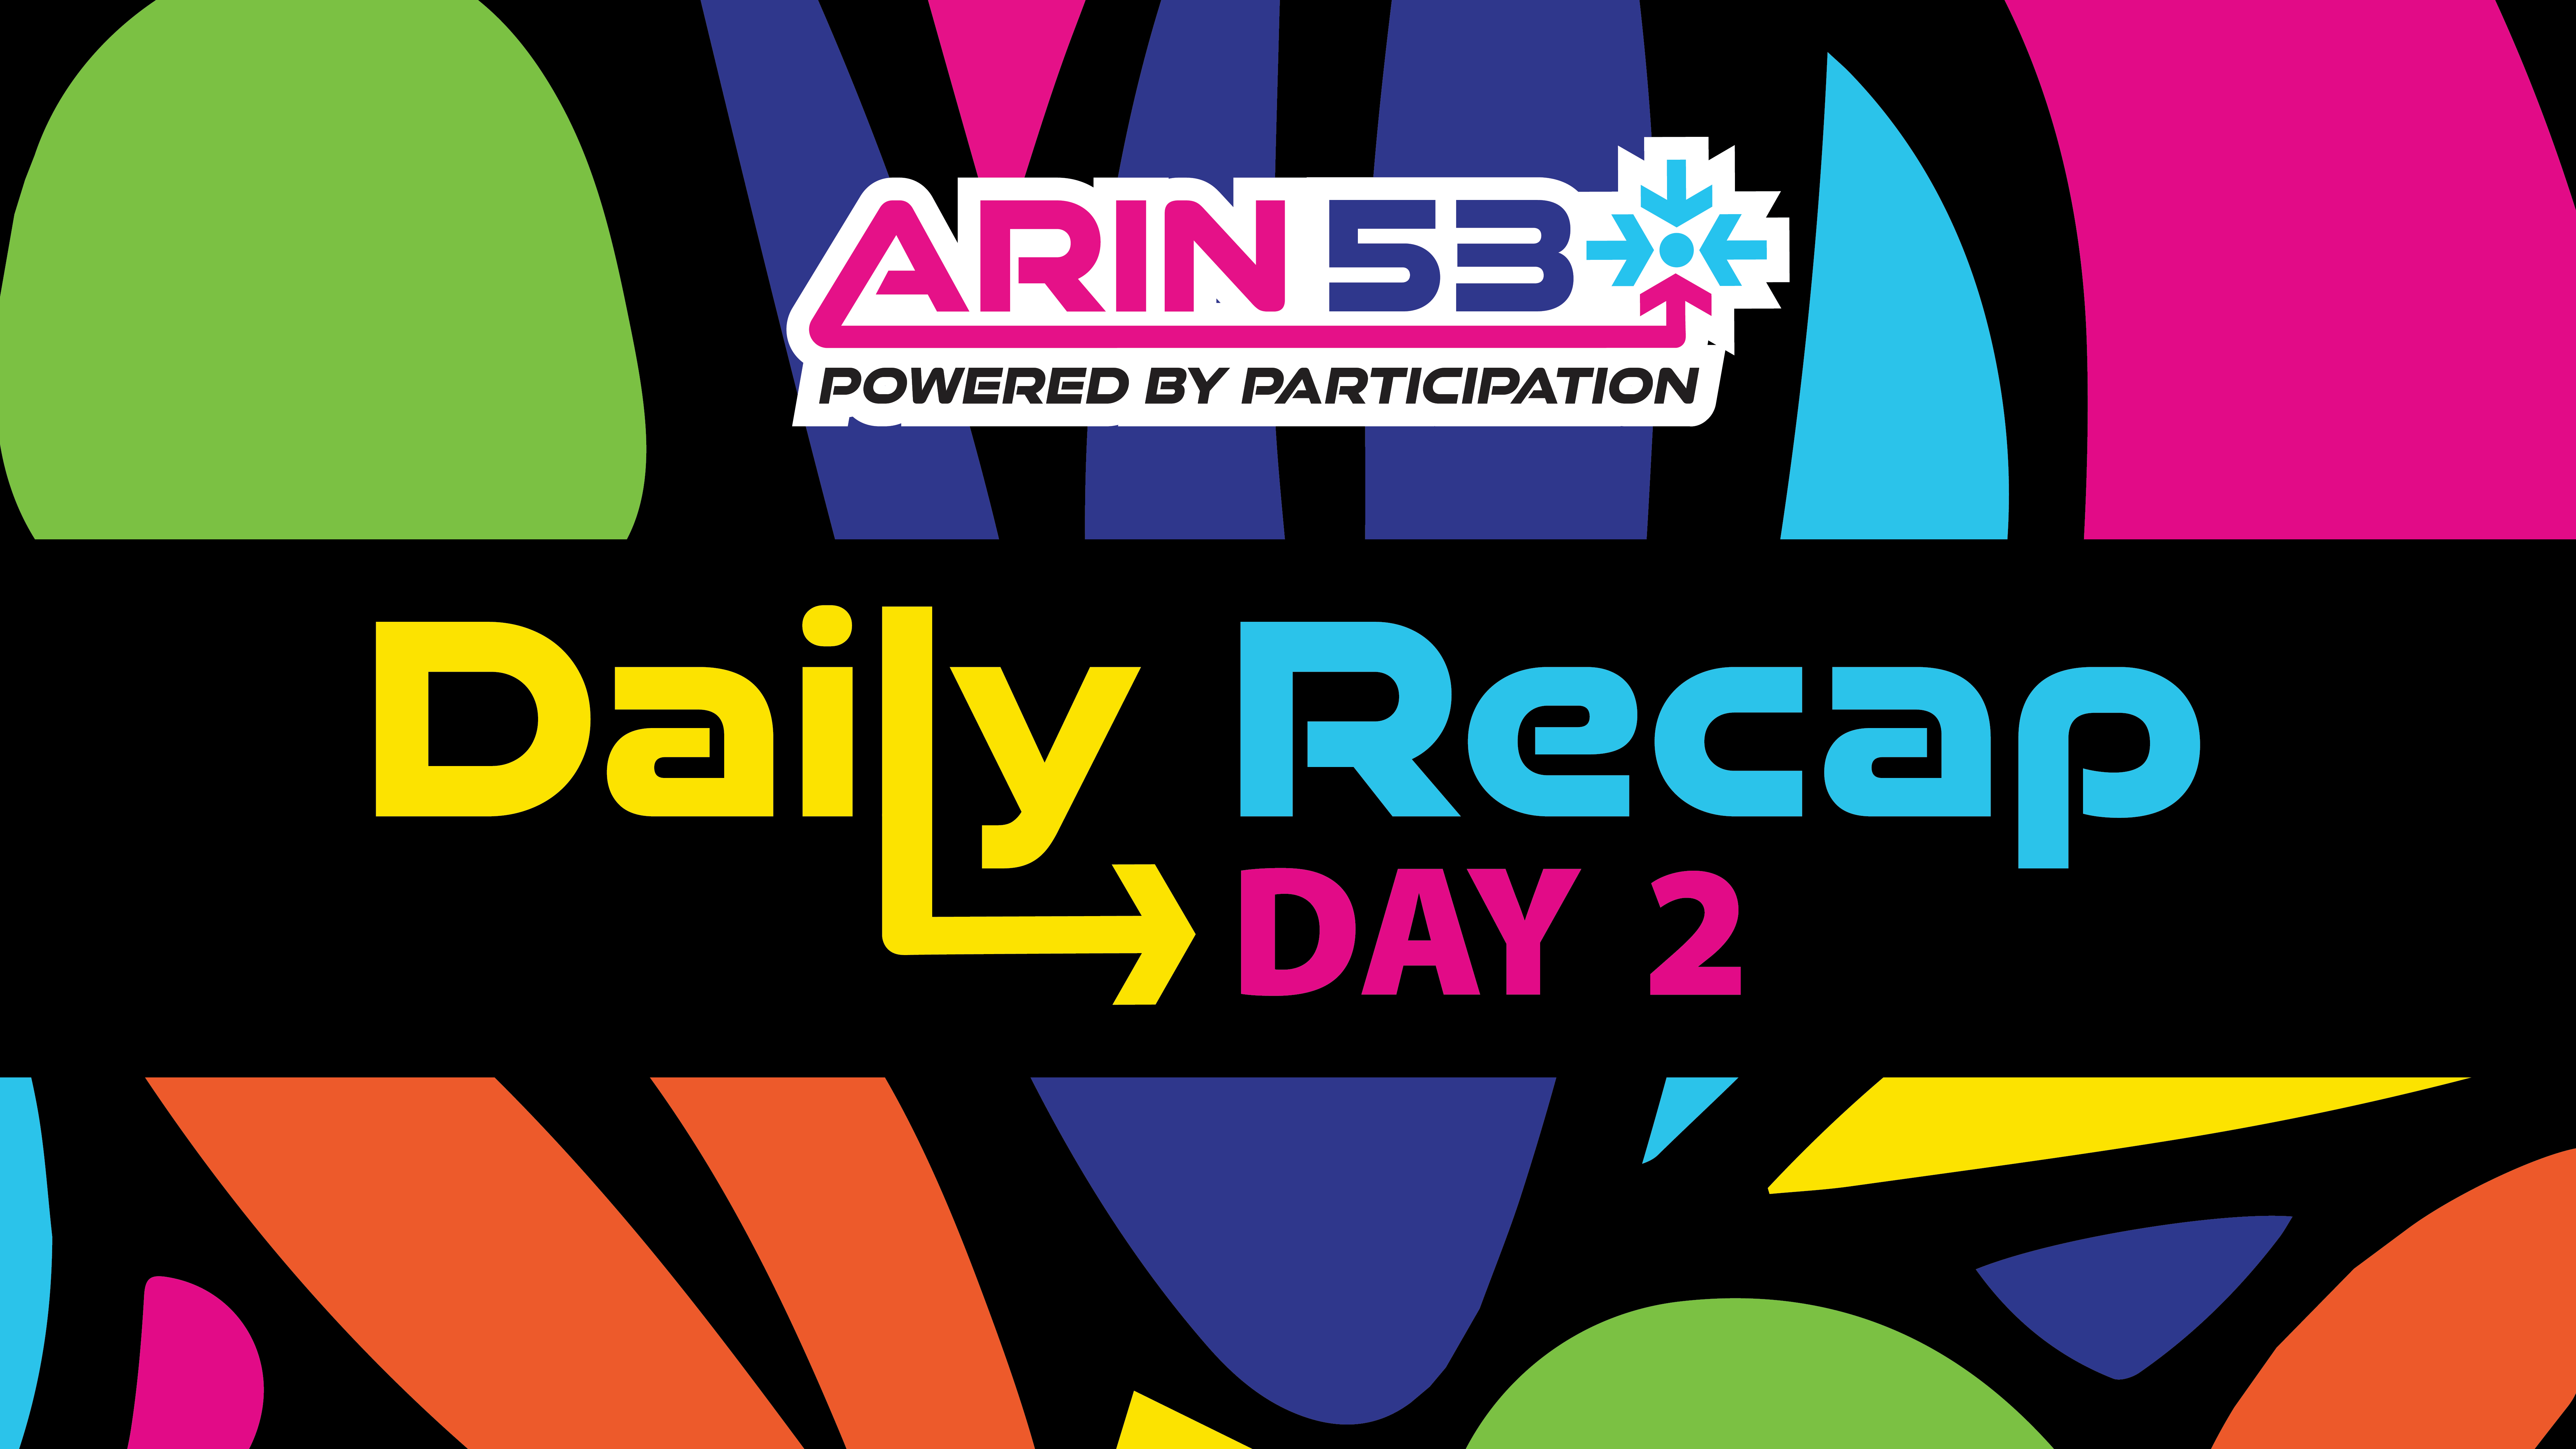 ARIN 53 Day 2 Recap